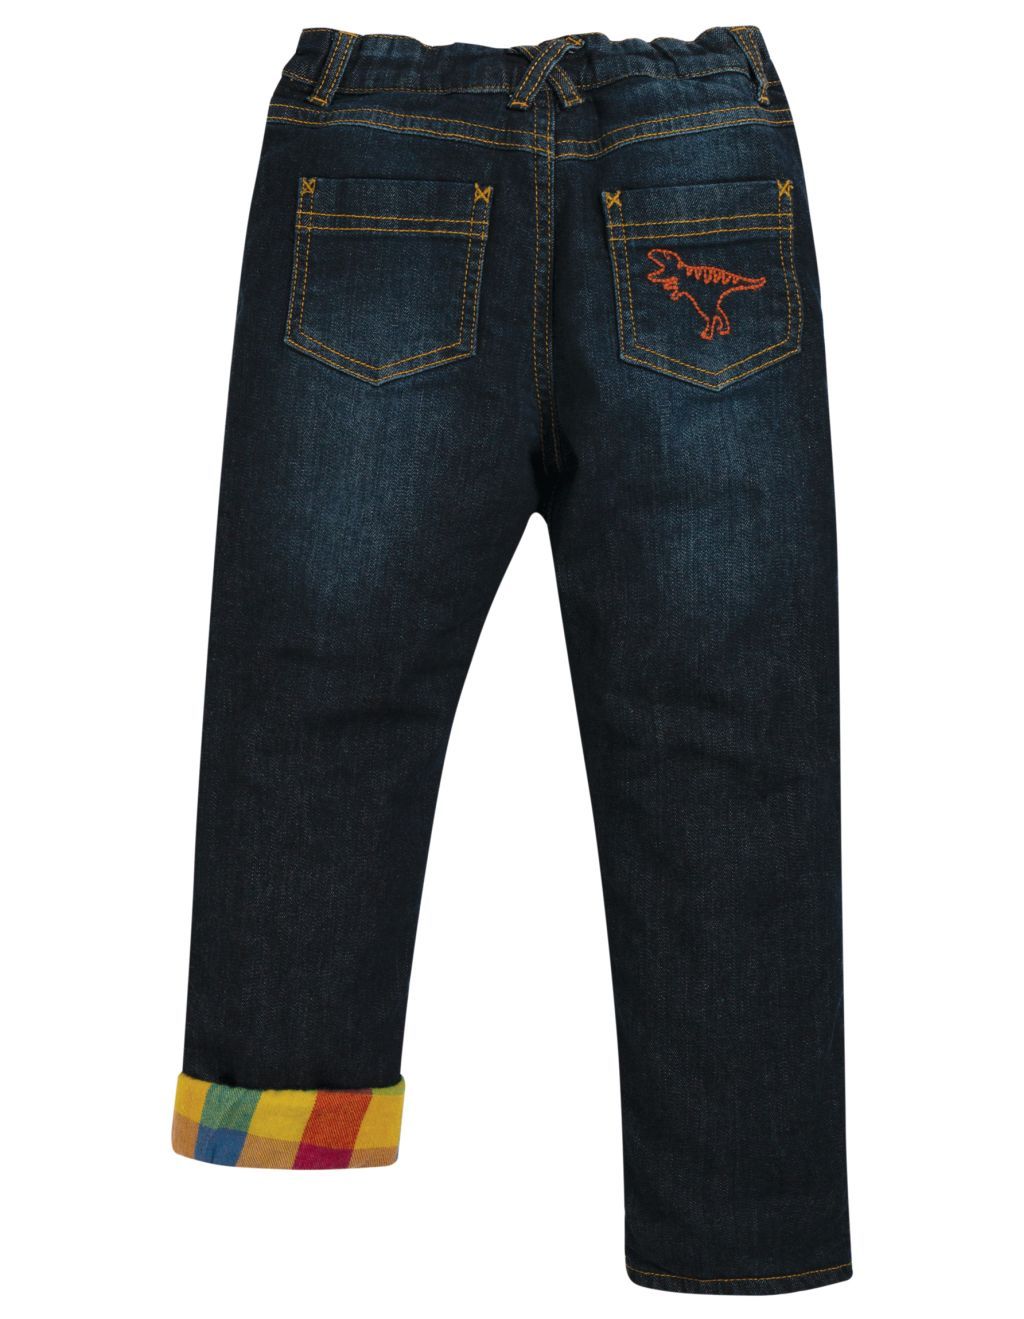 Lumberjack Lined Jeans Dark Wash Denim 98/104